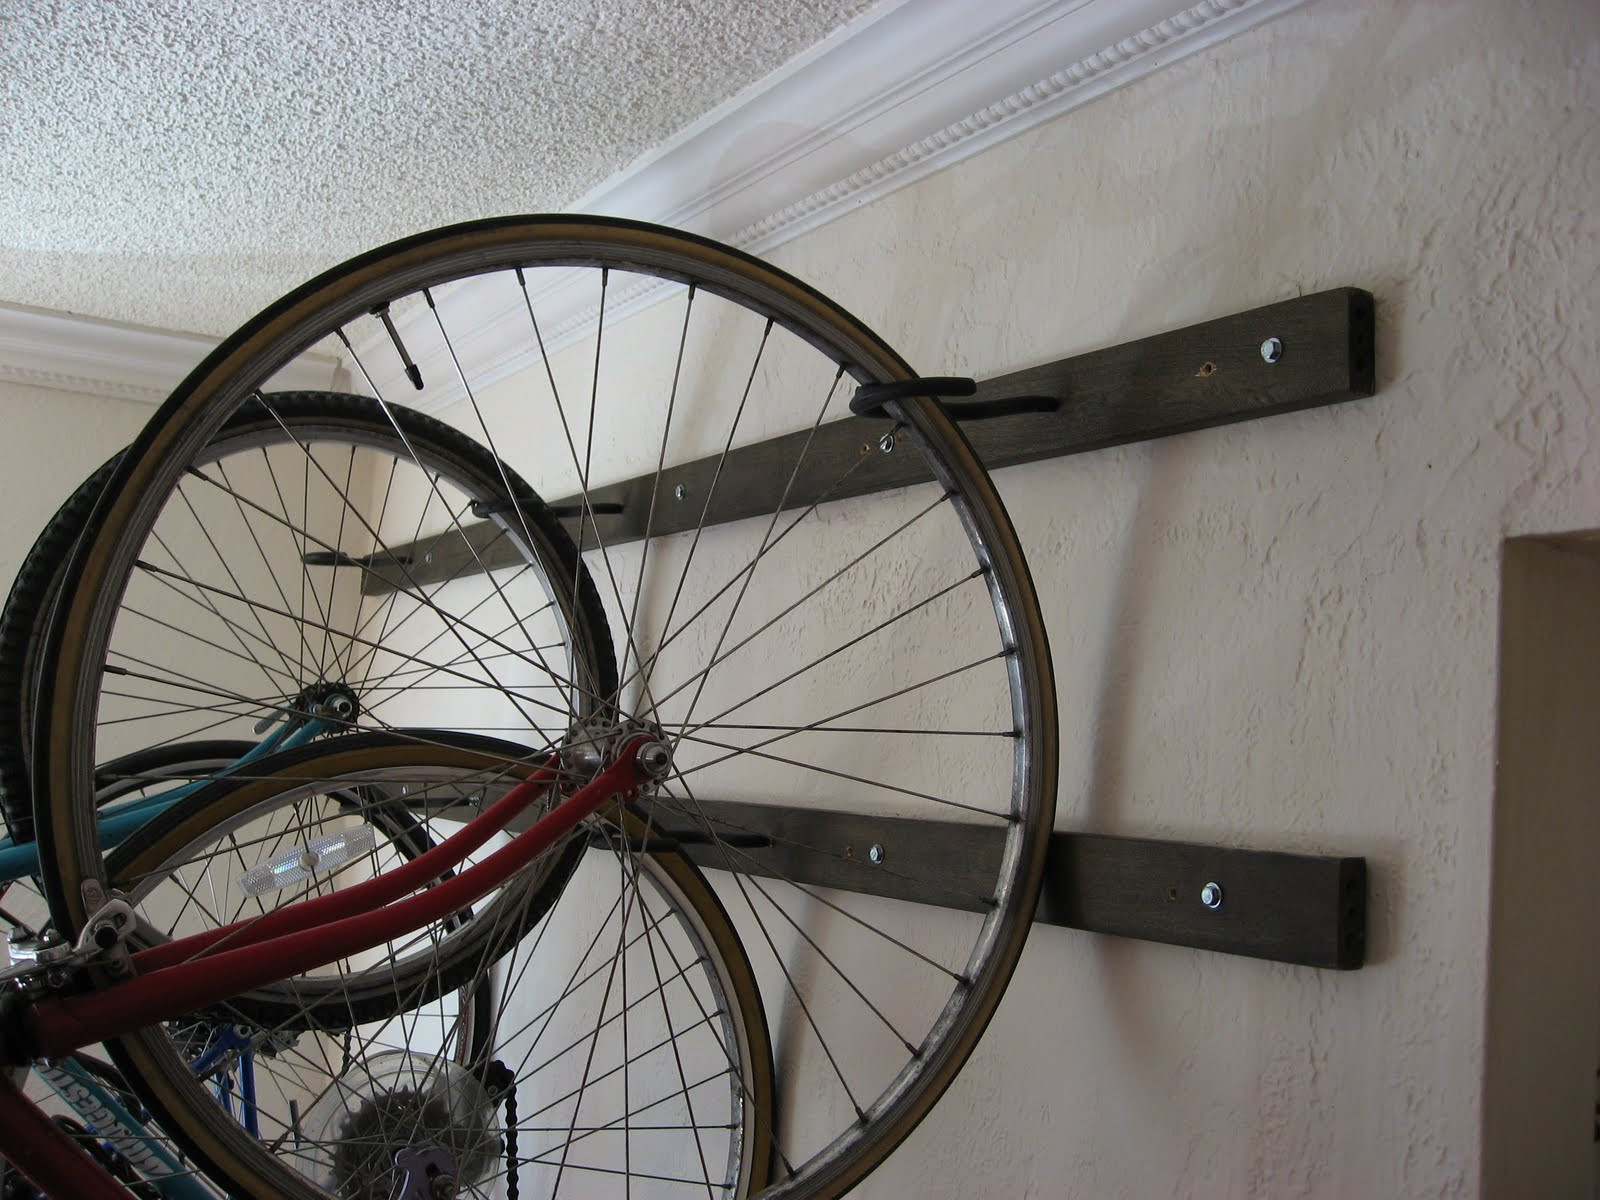 DIY Hanging Bike Rack
 Girl on Bike Post 100 My Brand New Homemade Wall